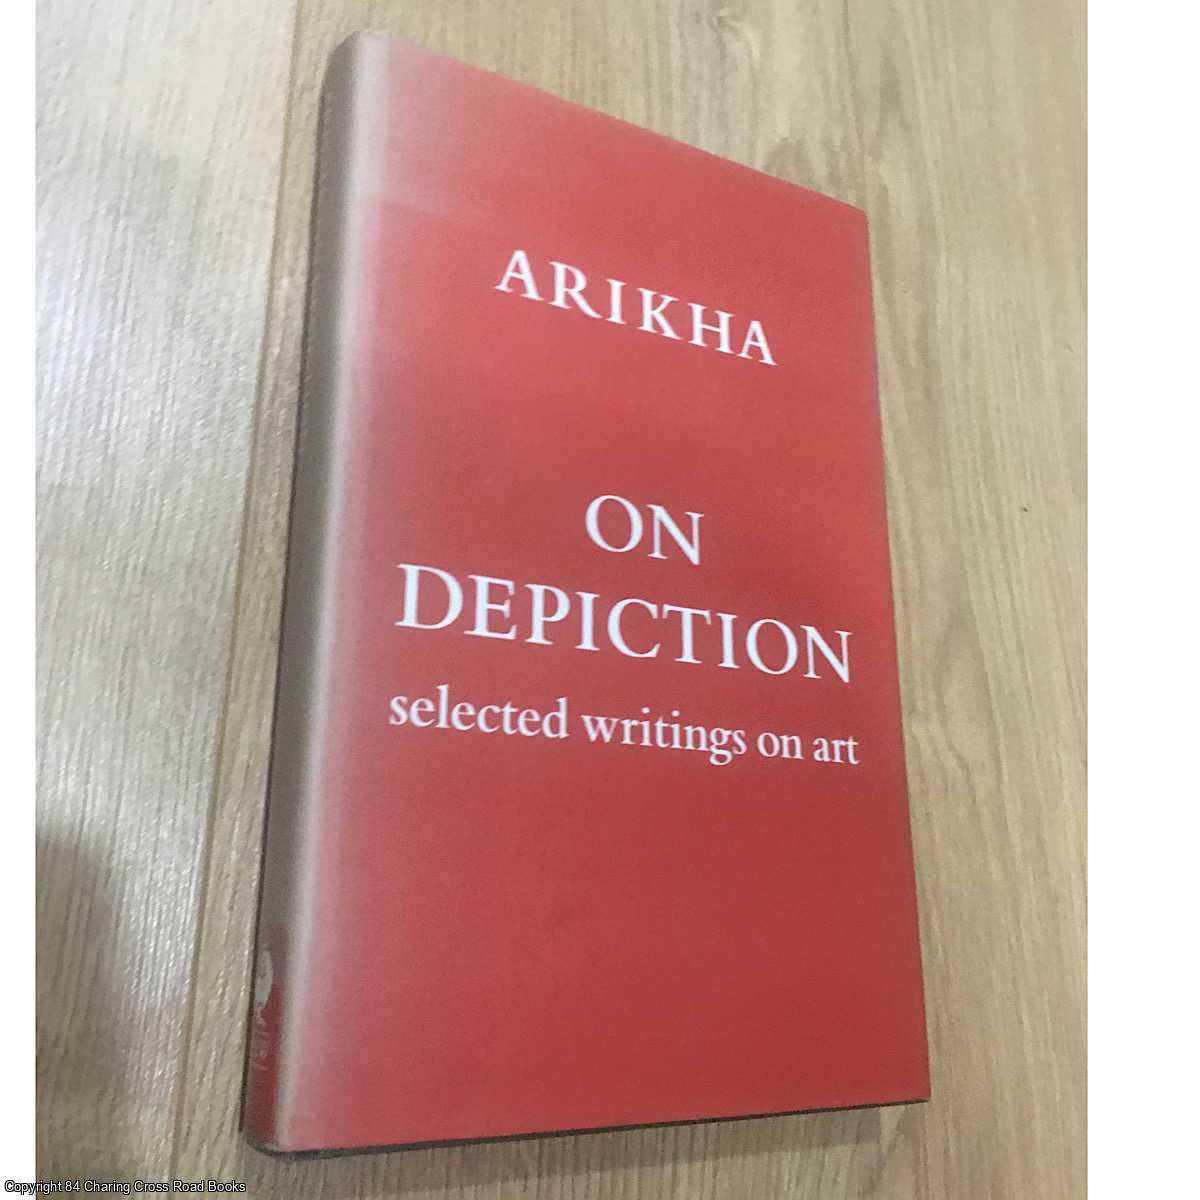 Avigdor Arikha - On Depiction: selected writings on art, 1965 - 1994